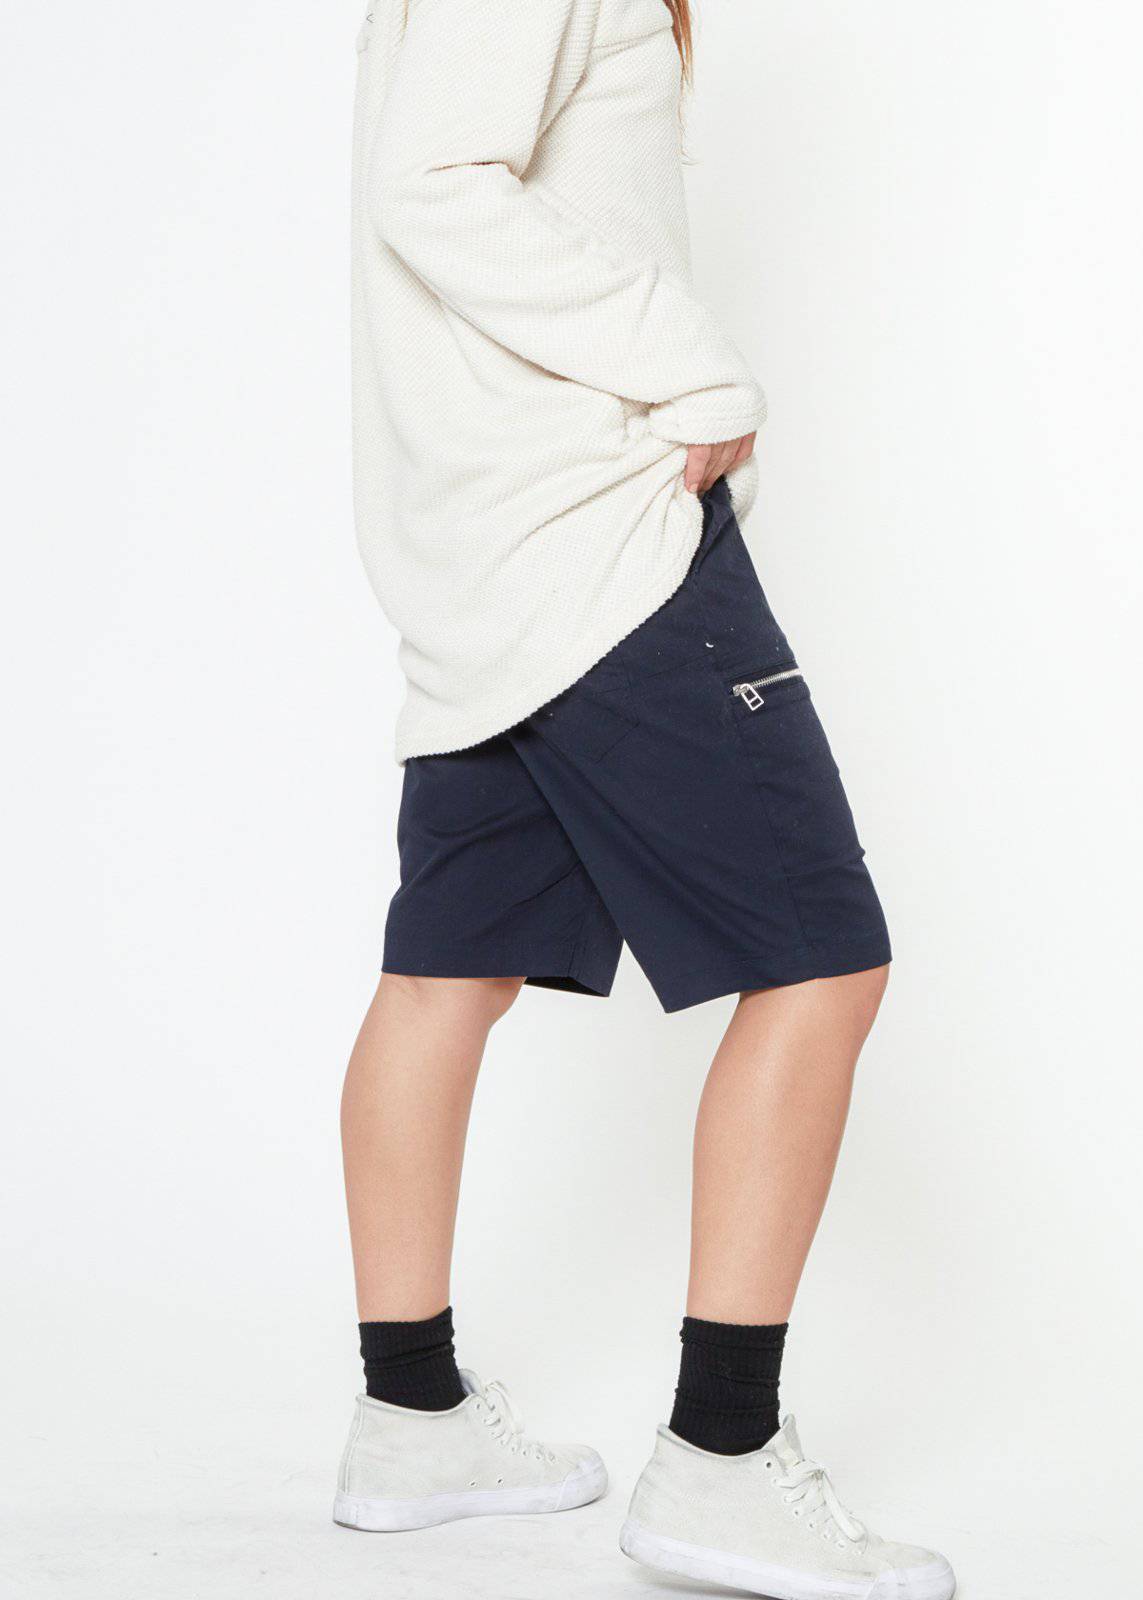 Konus Men's Zipper Cargo Shorts With Drawcord in Navy by Shop at Konus